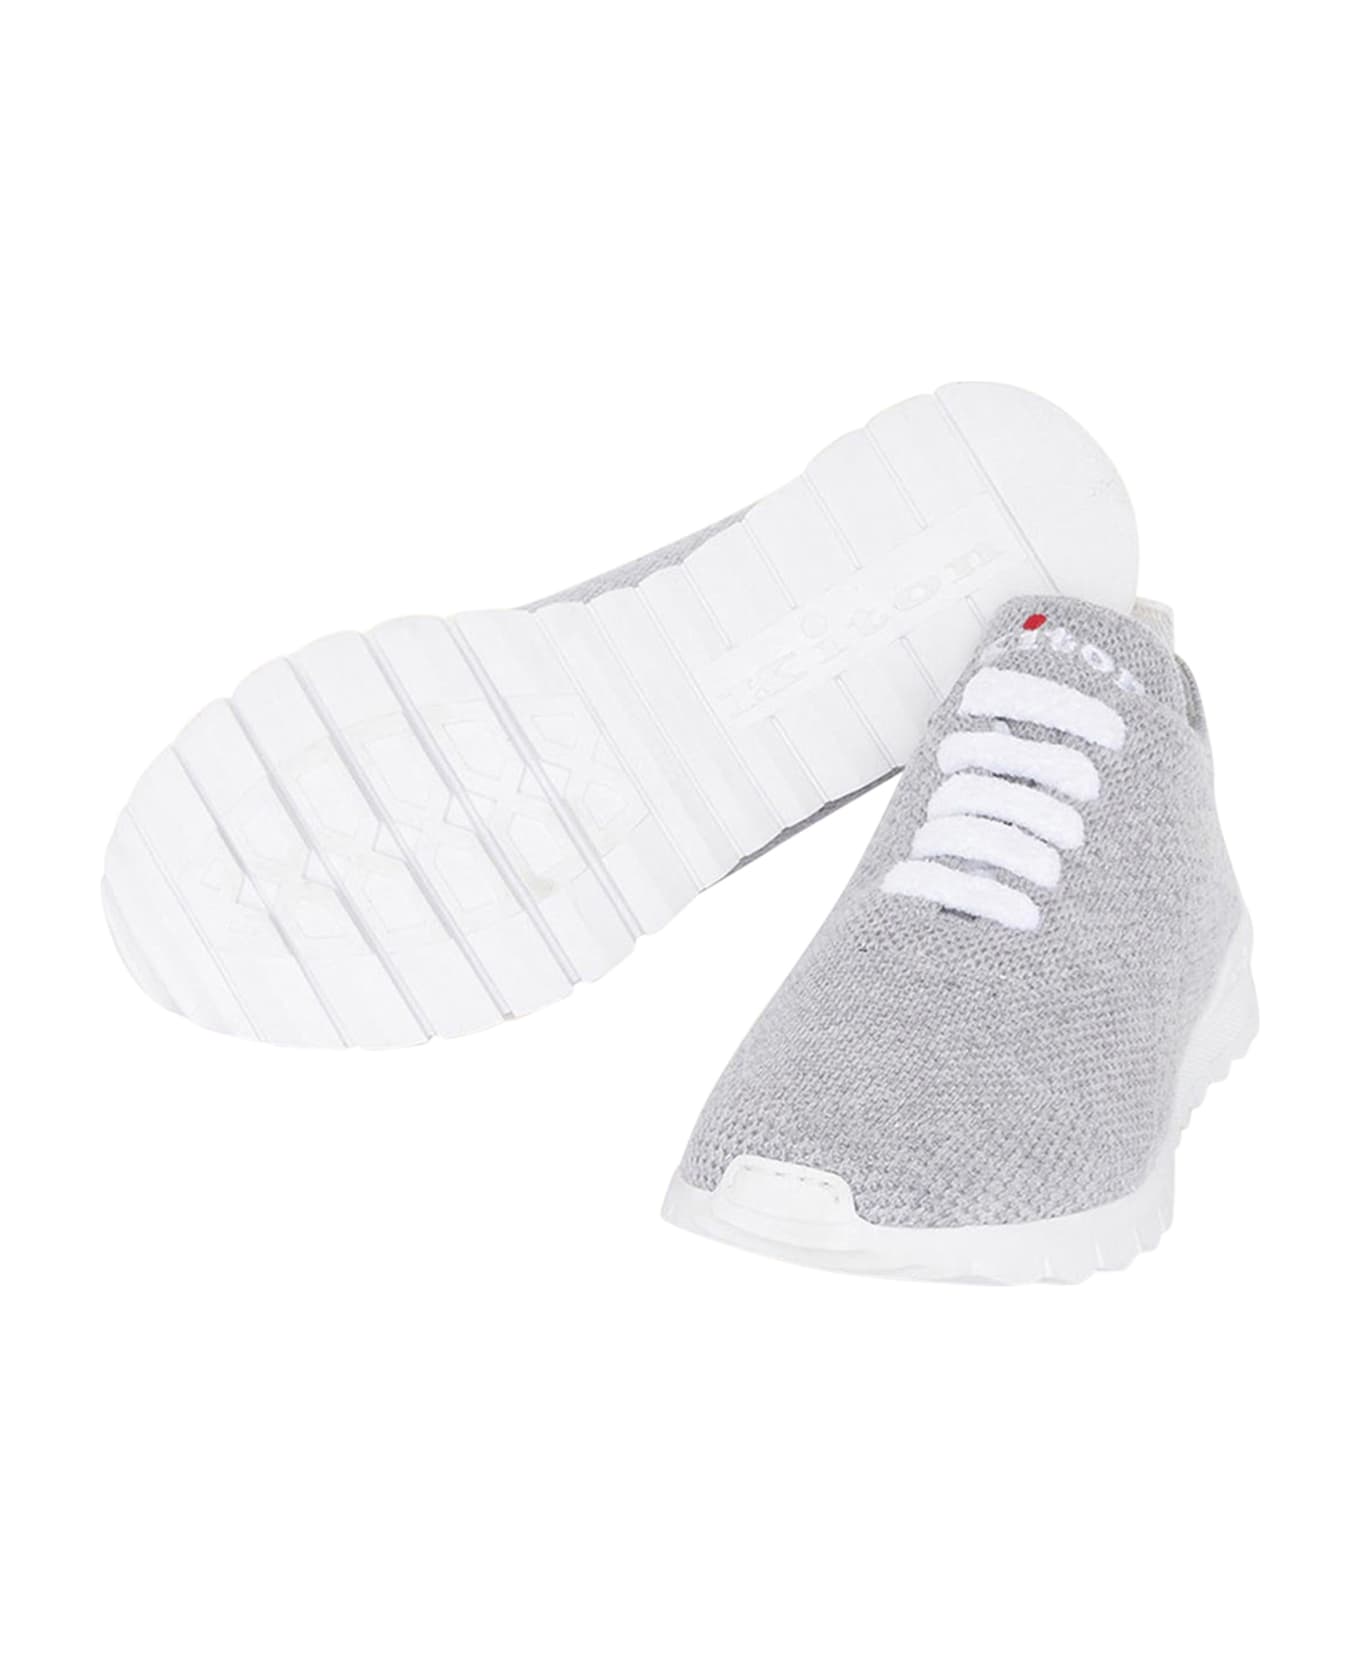 Kiton Sneakers Shoes Cashmere - MEDIUM GREY